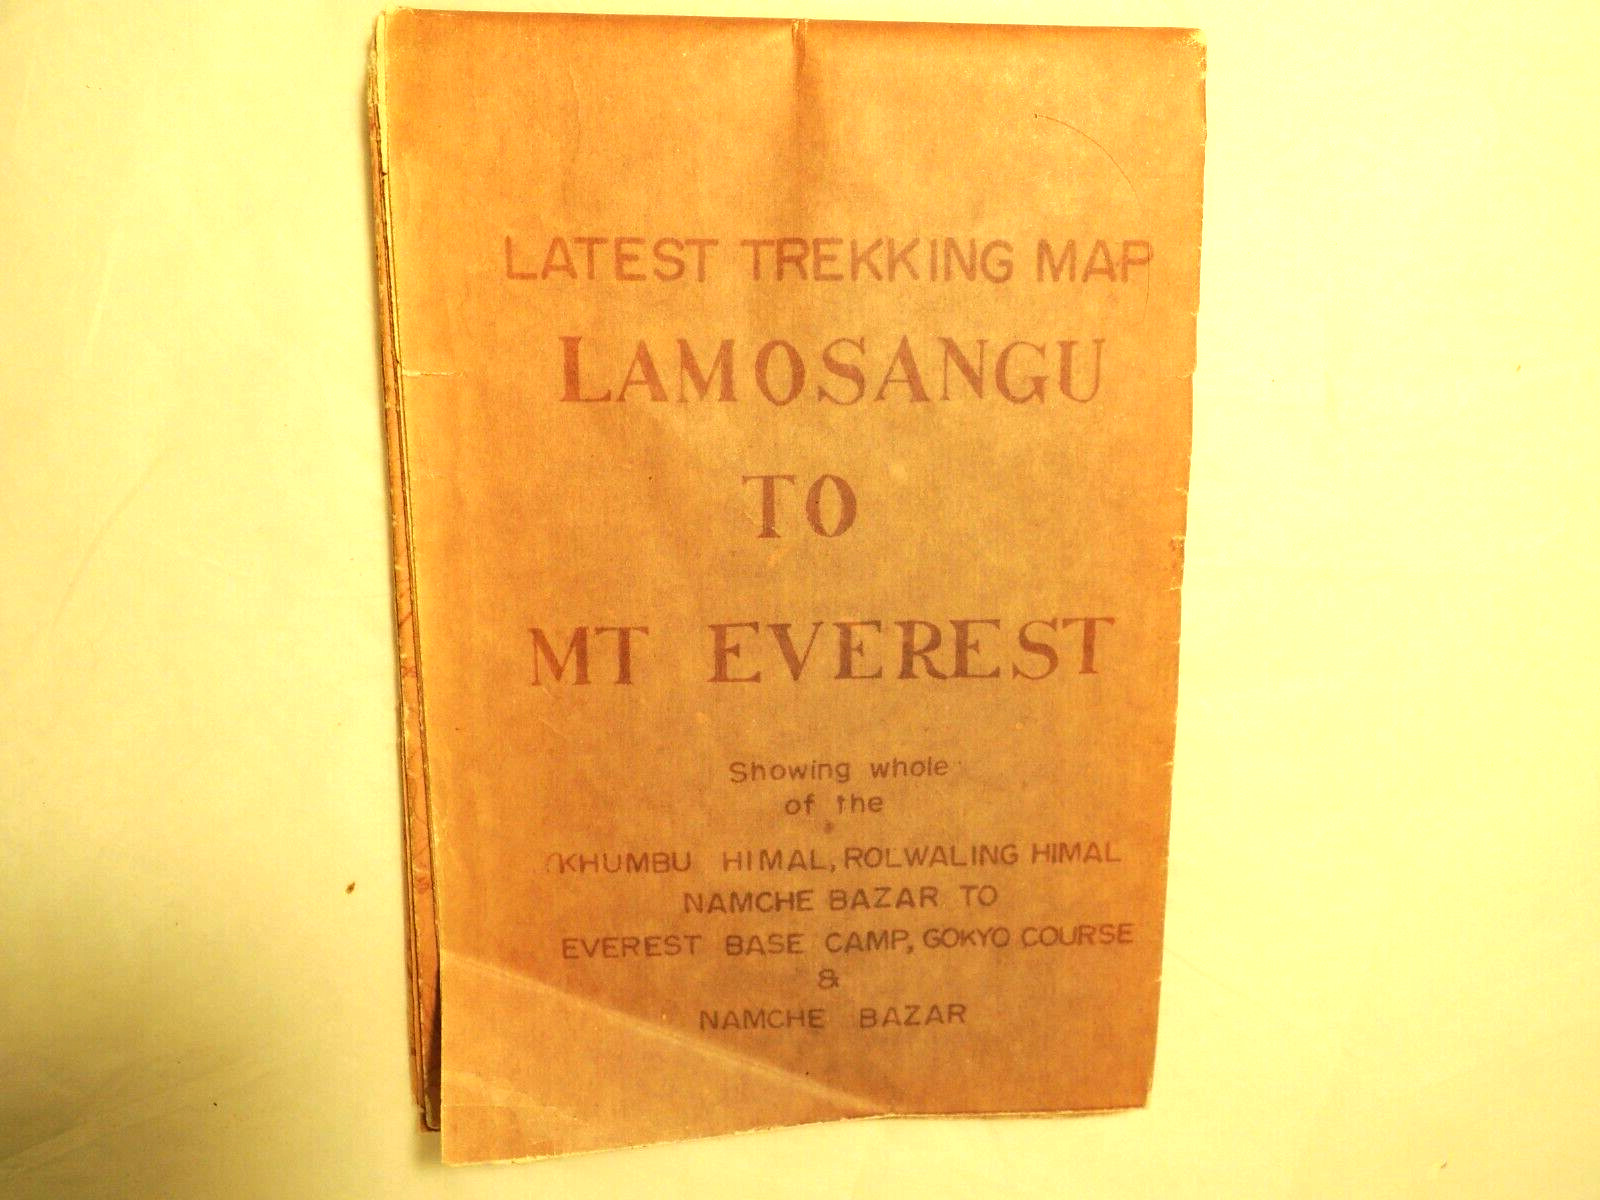 Nepal Mt Everest Mountain Climbing Map Lamosangu To Mt Everest Made in Kathmandu